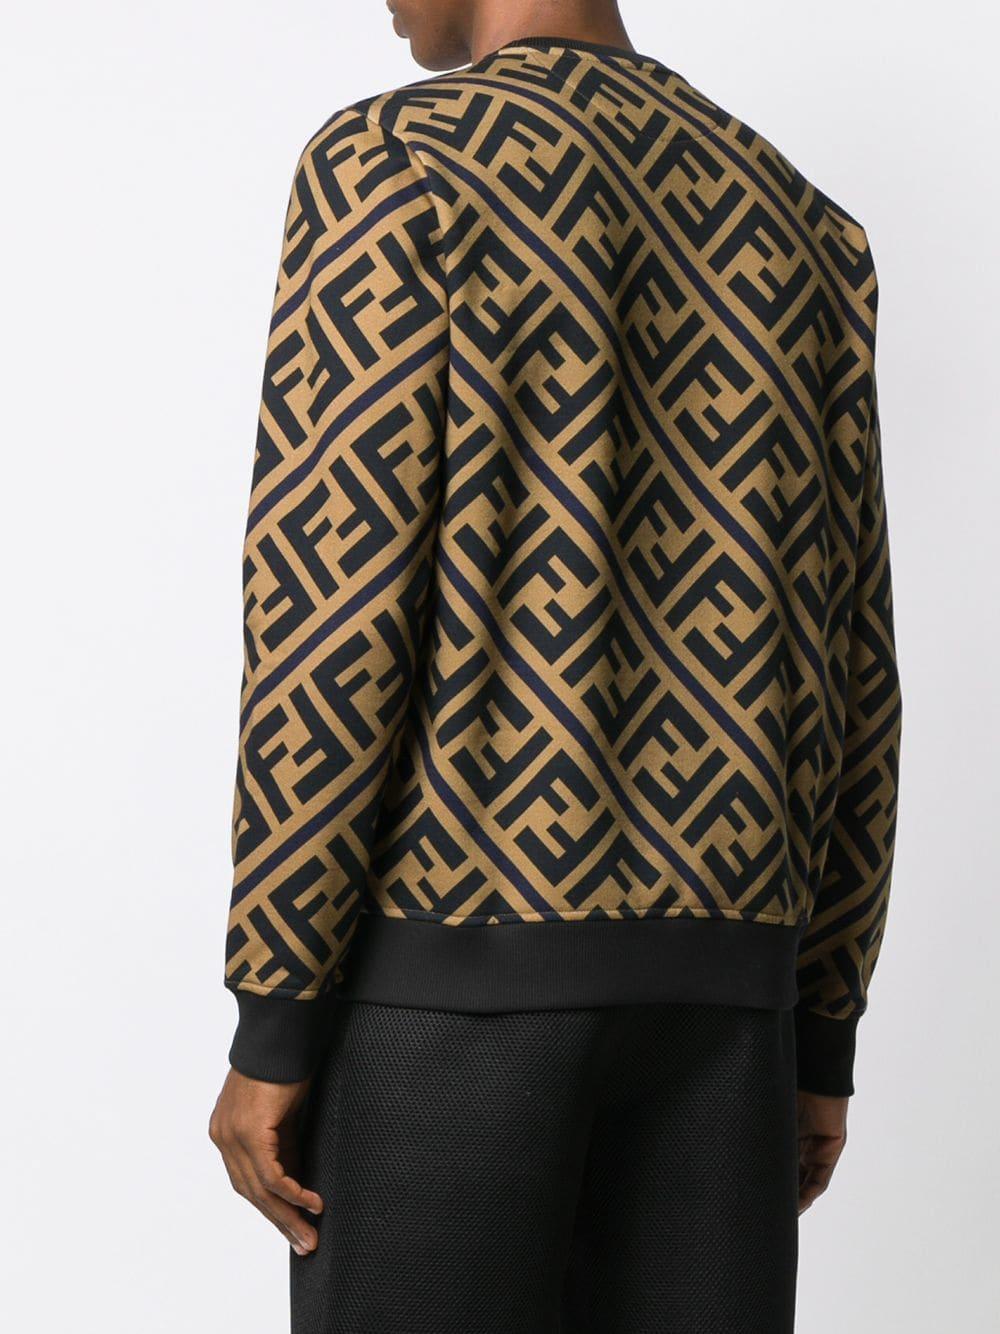 Fendi Cotton Monogram Pattern Sweatshirt in Black for Men - Lyst